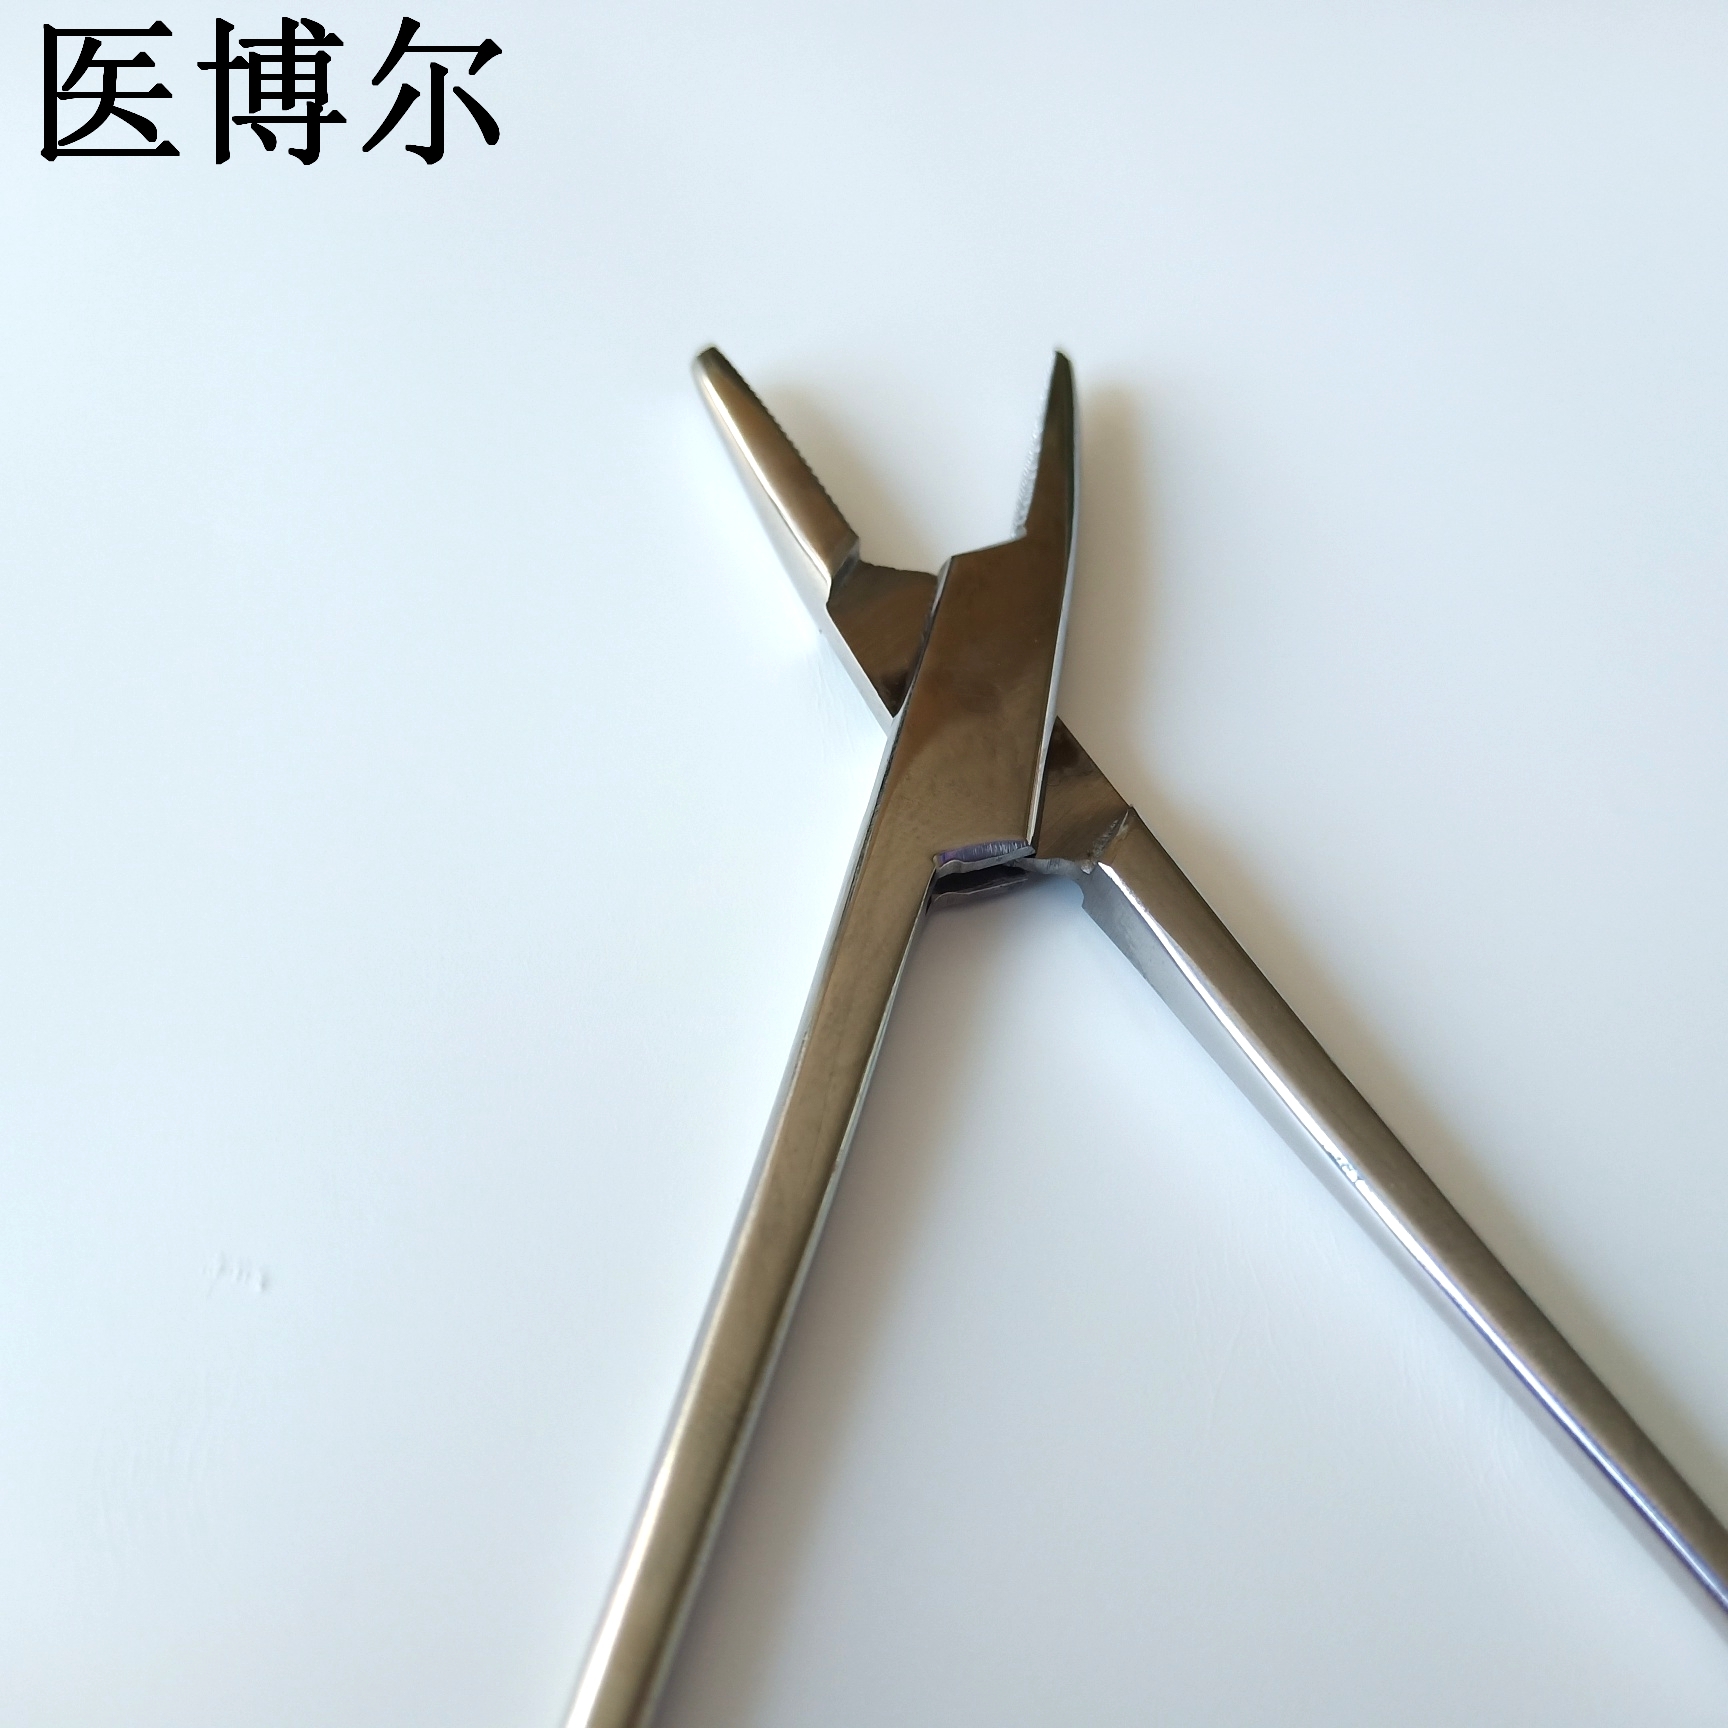 16cm细针持针器 (2)_看图王.jpg